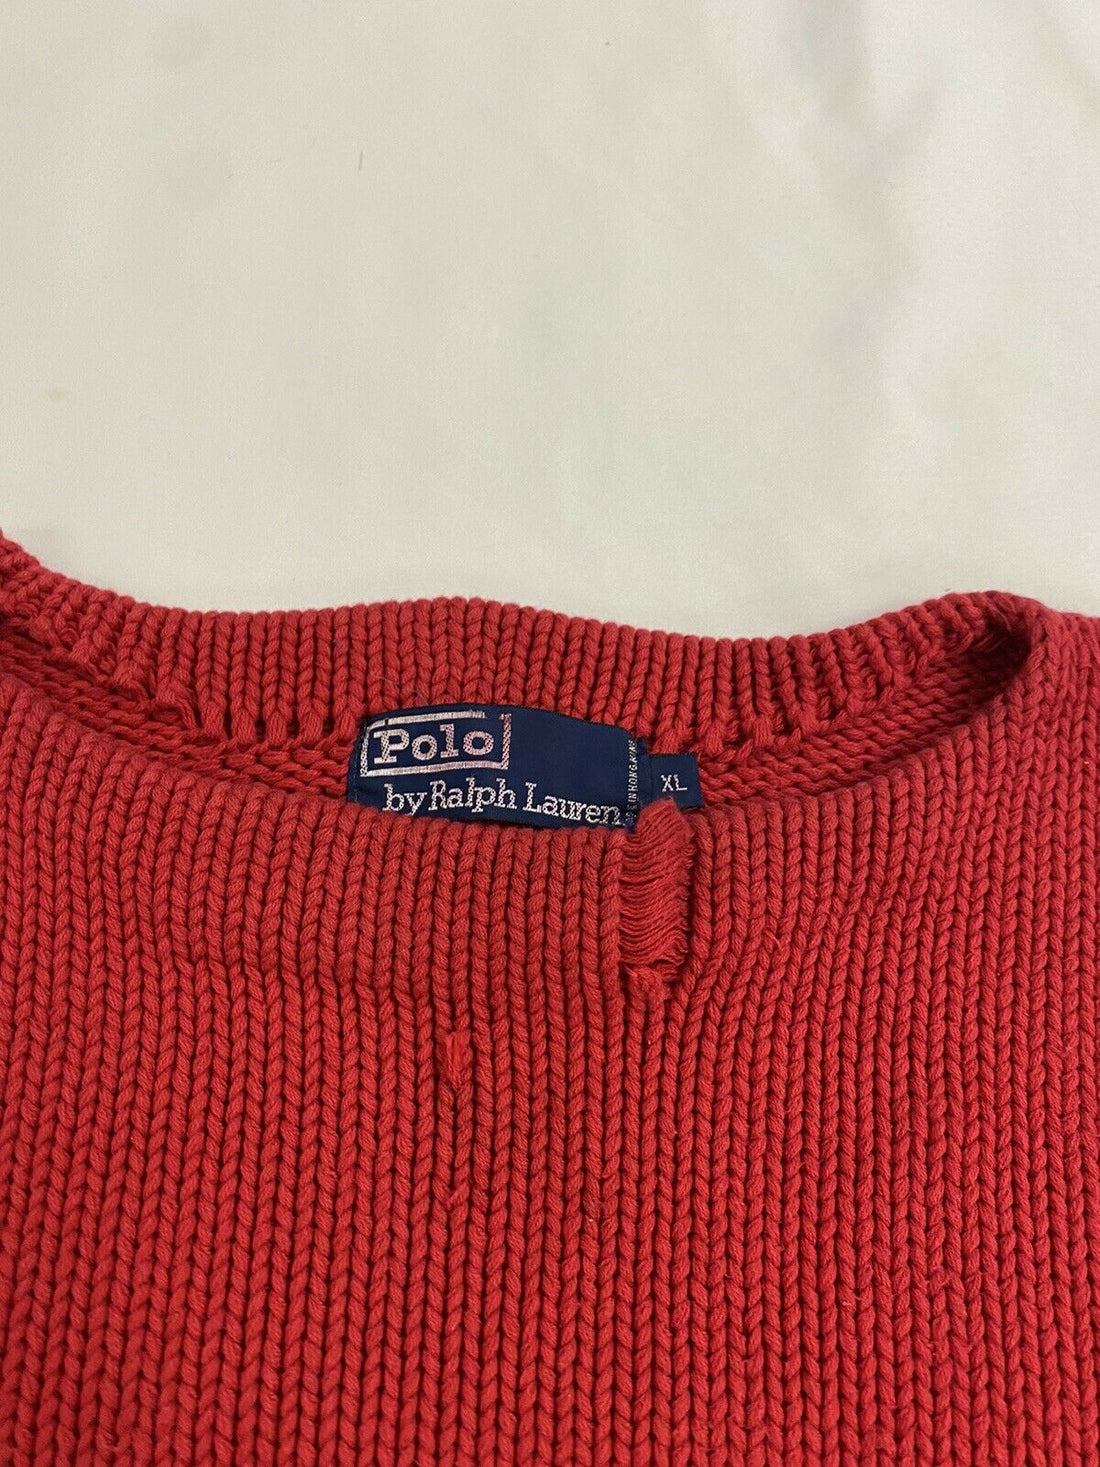 Vintage Polo Ralph Lauren Knit Crewneck Sweater Size XL Red 1987 80s Cross Flag